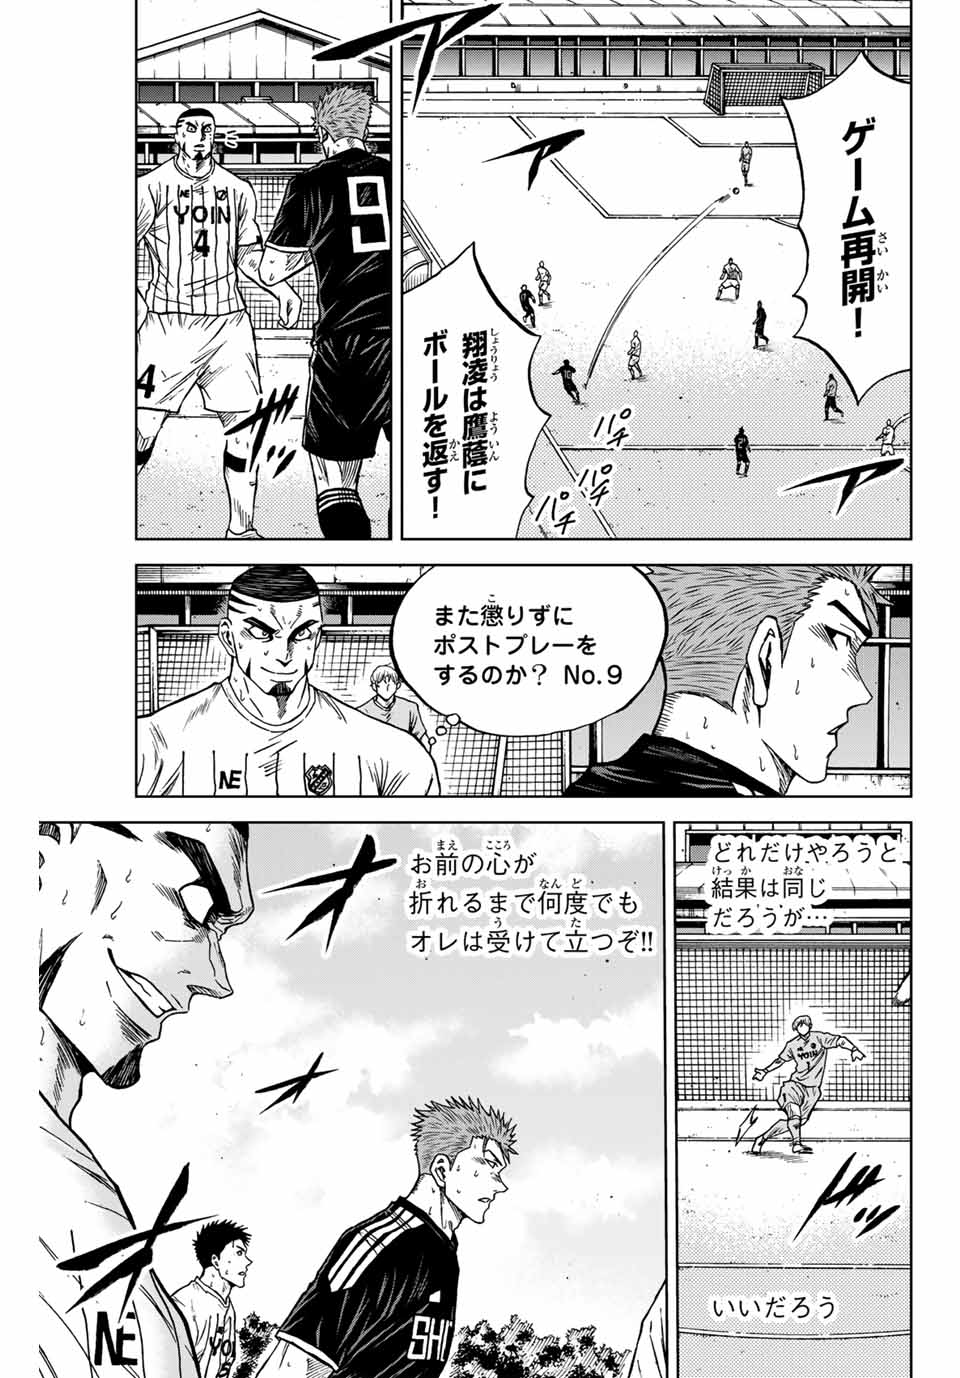 Aoku Somero - Chapter 95 - Page 3